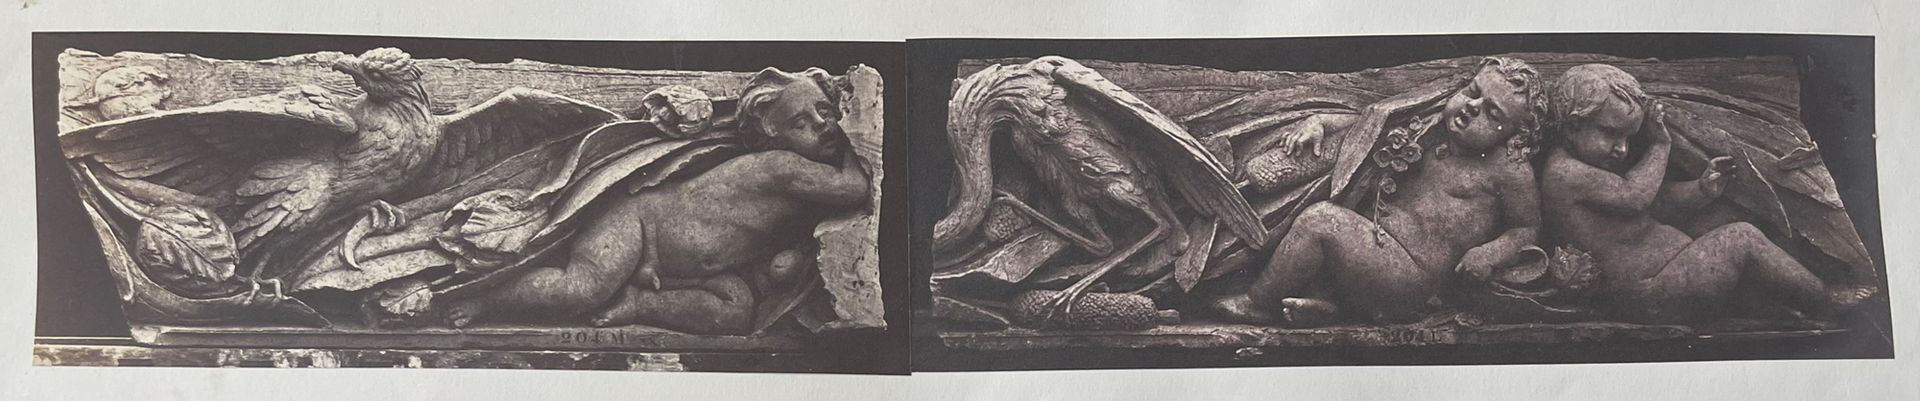 EDOUARD BALDUS (1813-1889) 
Le combat de l'oiseau et du serpent, dekorative Skul&hellip;